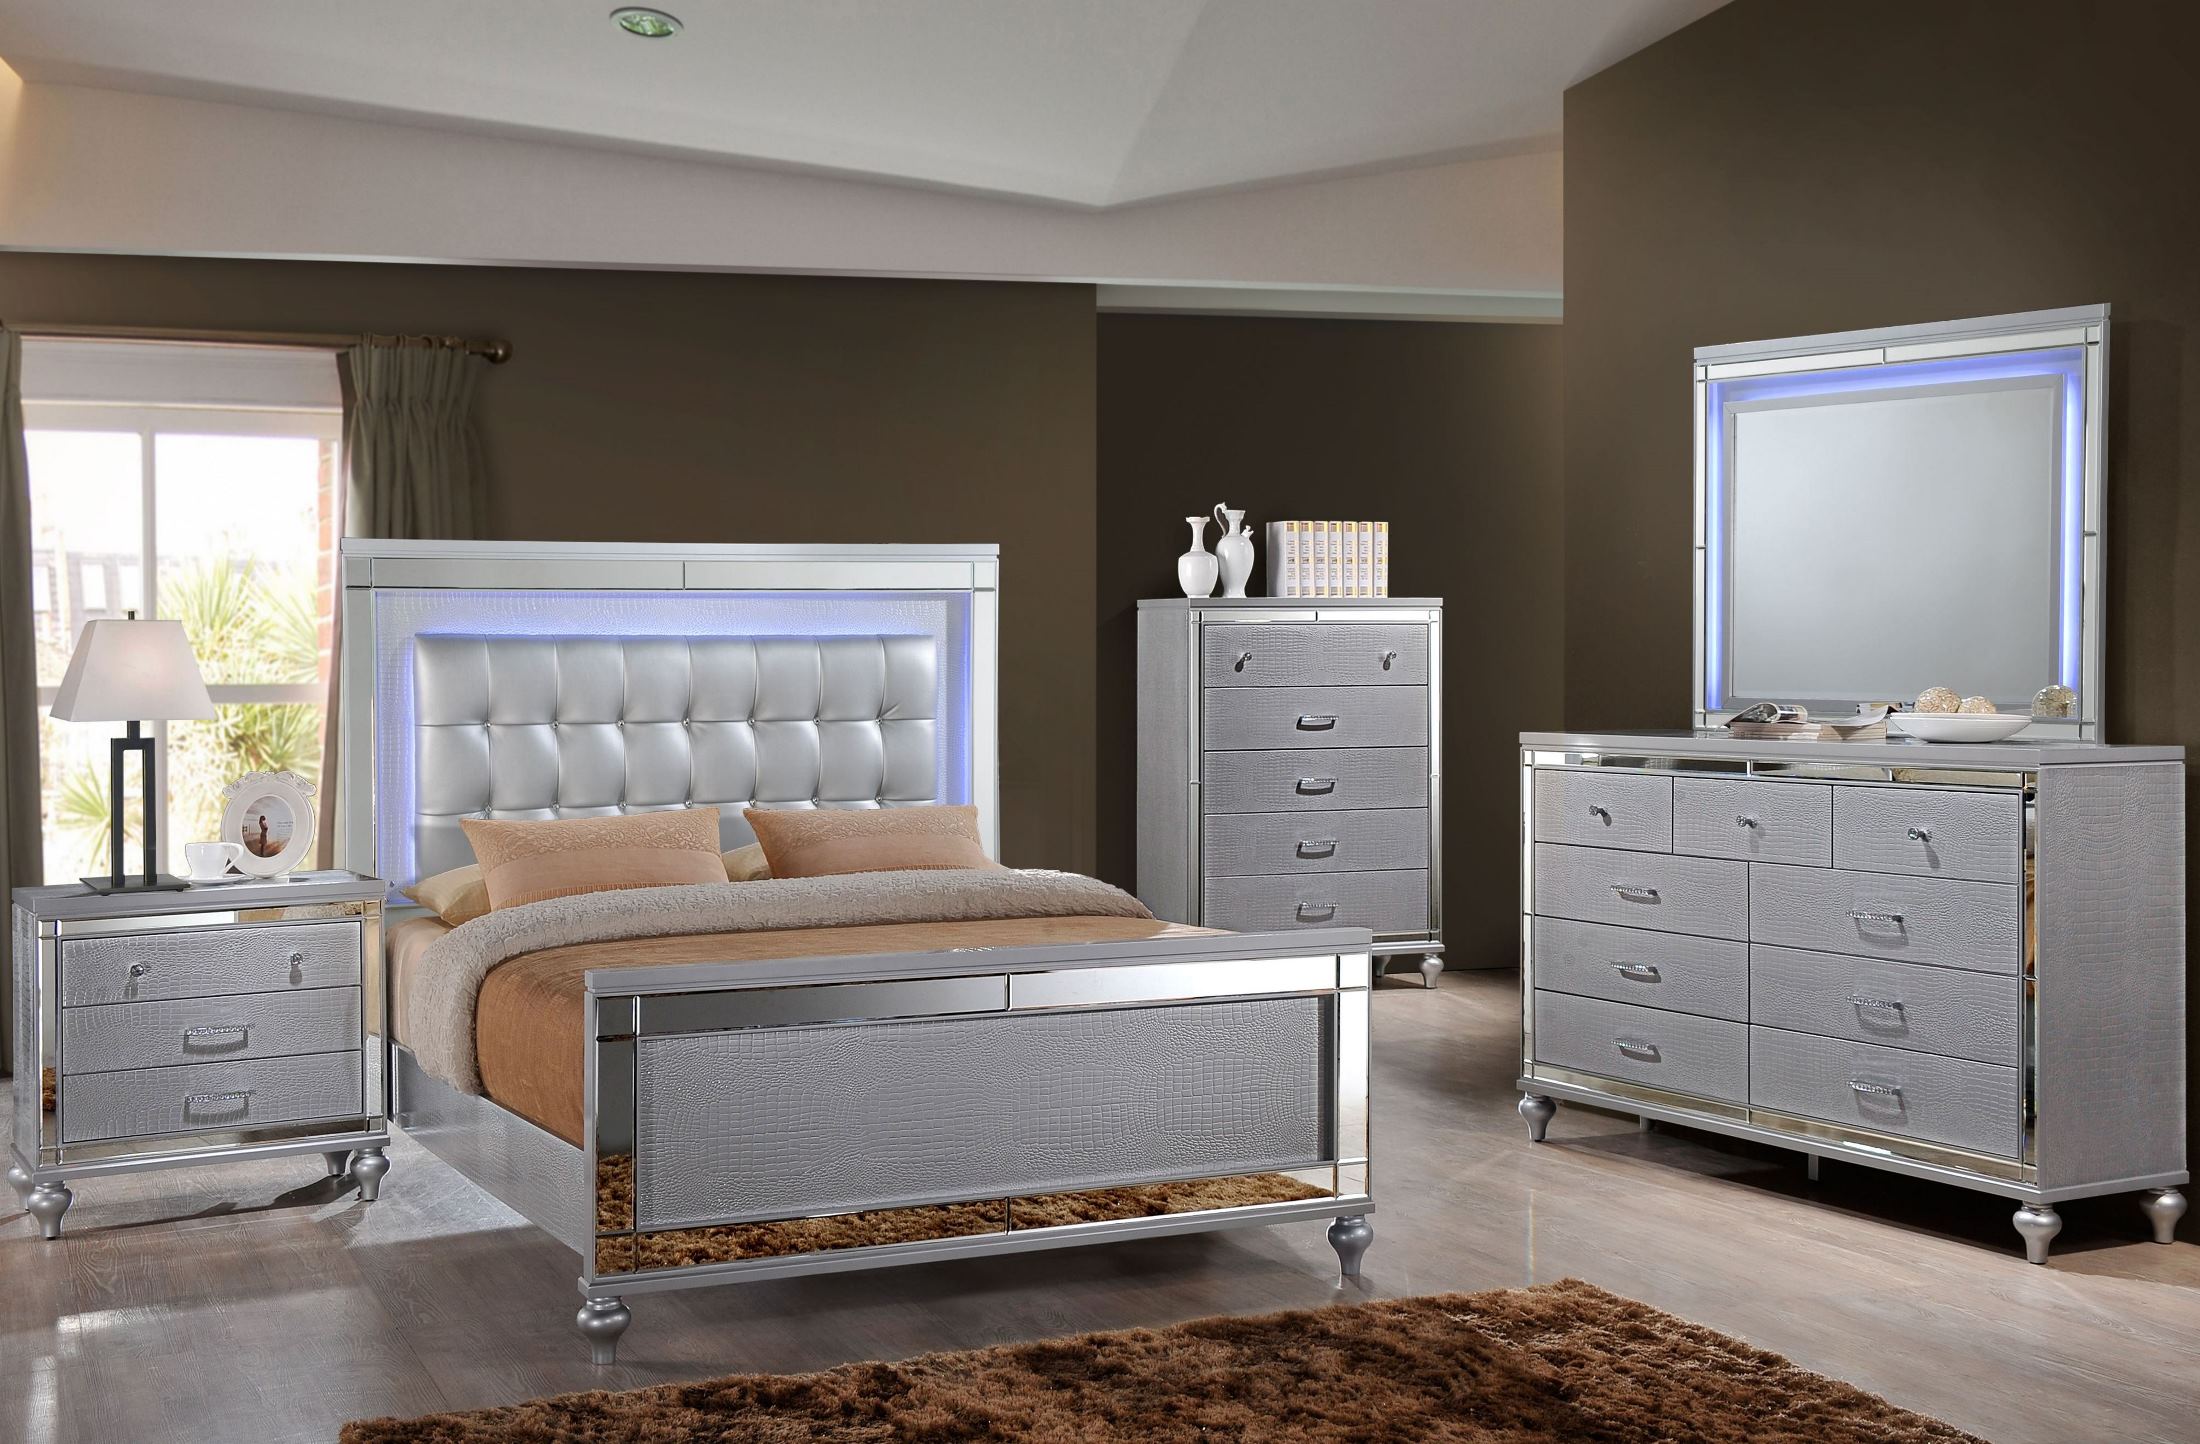 silver vanity with beige bedroom furniture